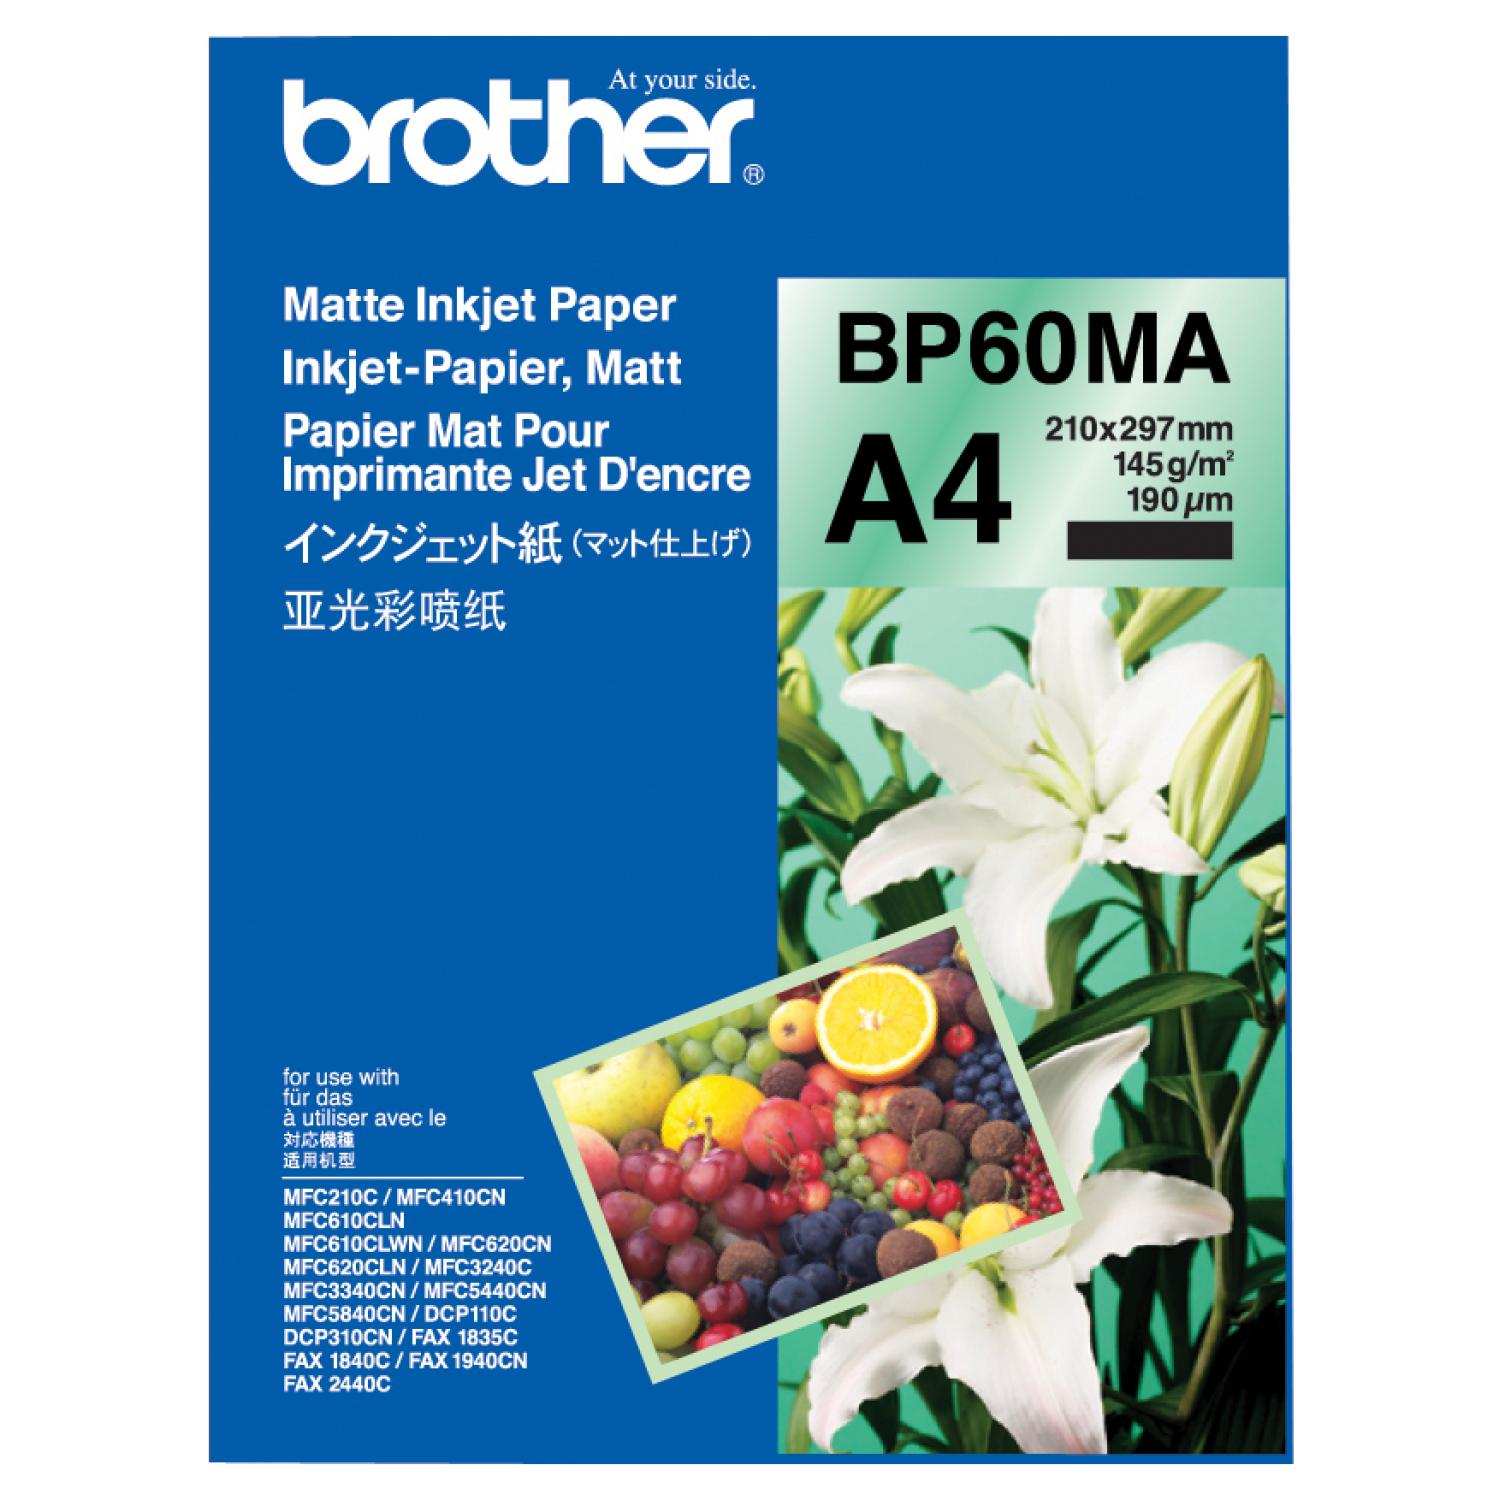 BP60MA Inkjet Papier A4 BROTHER